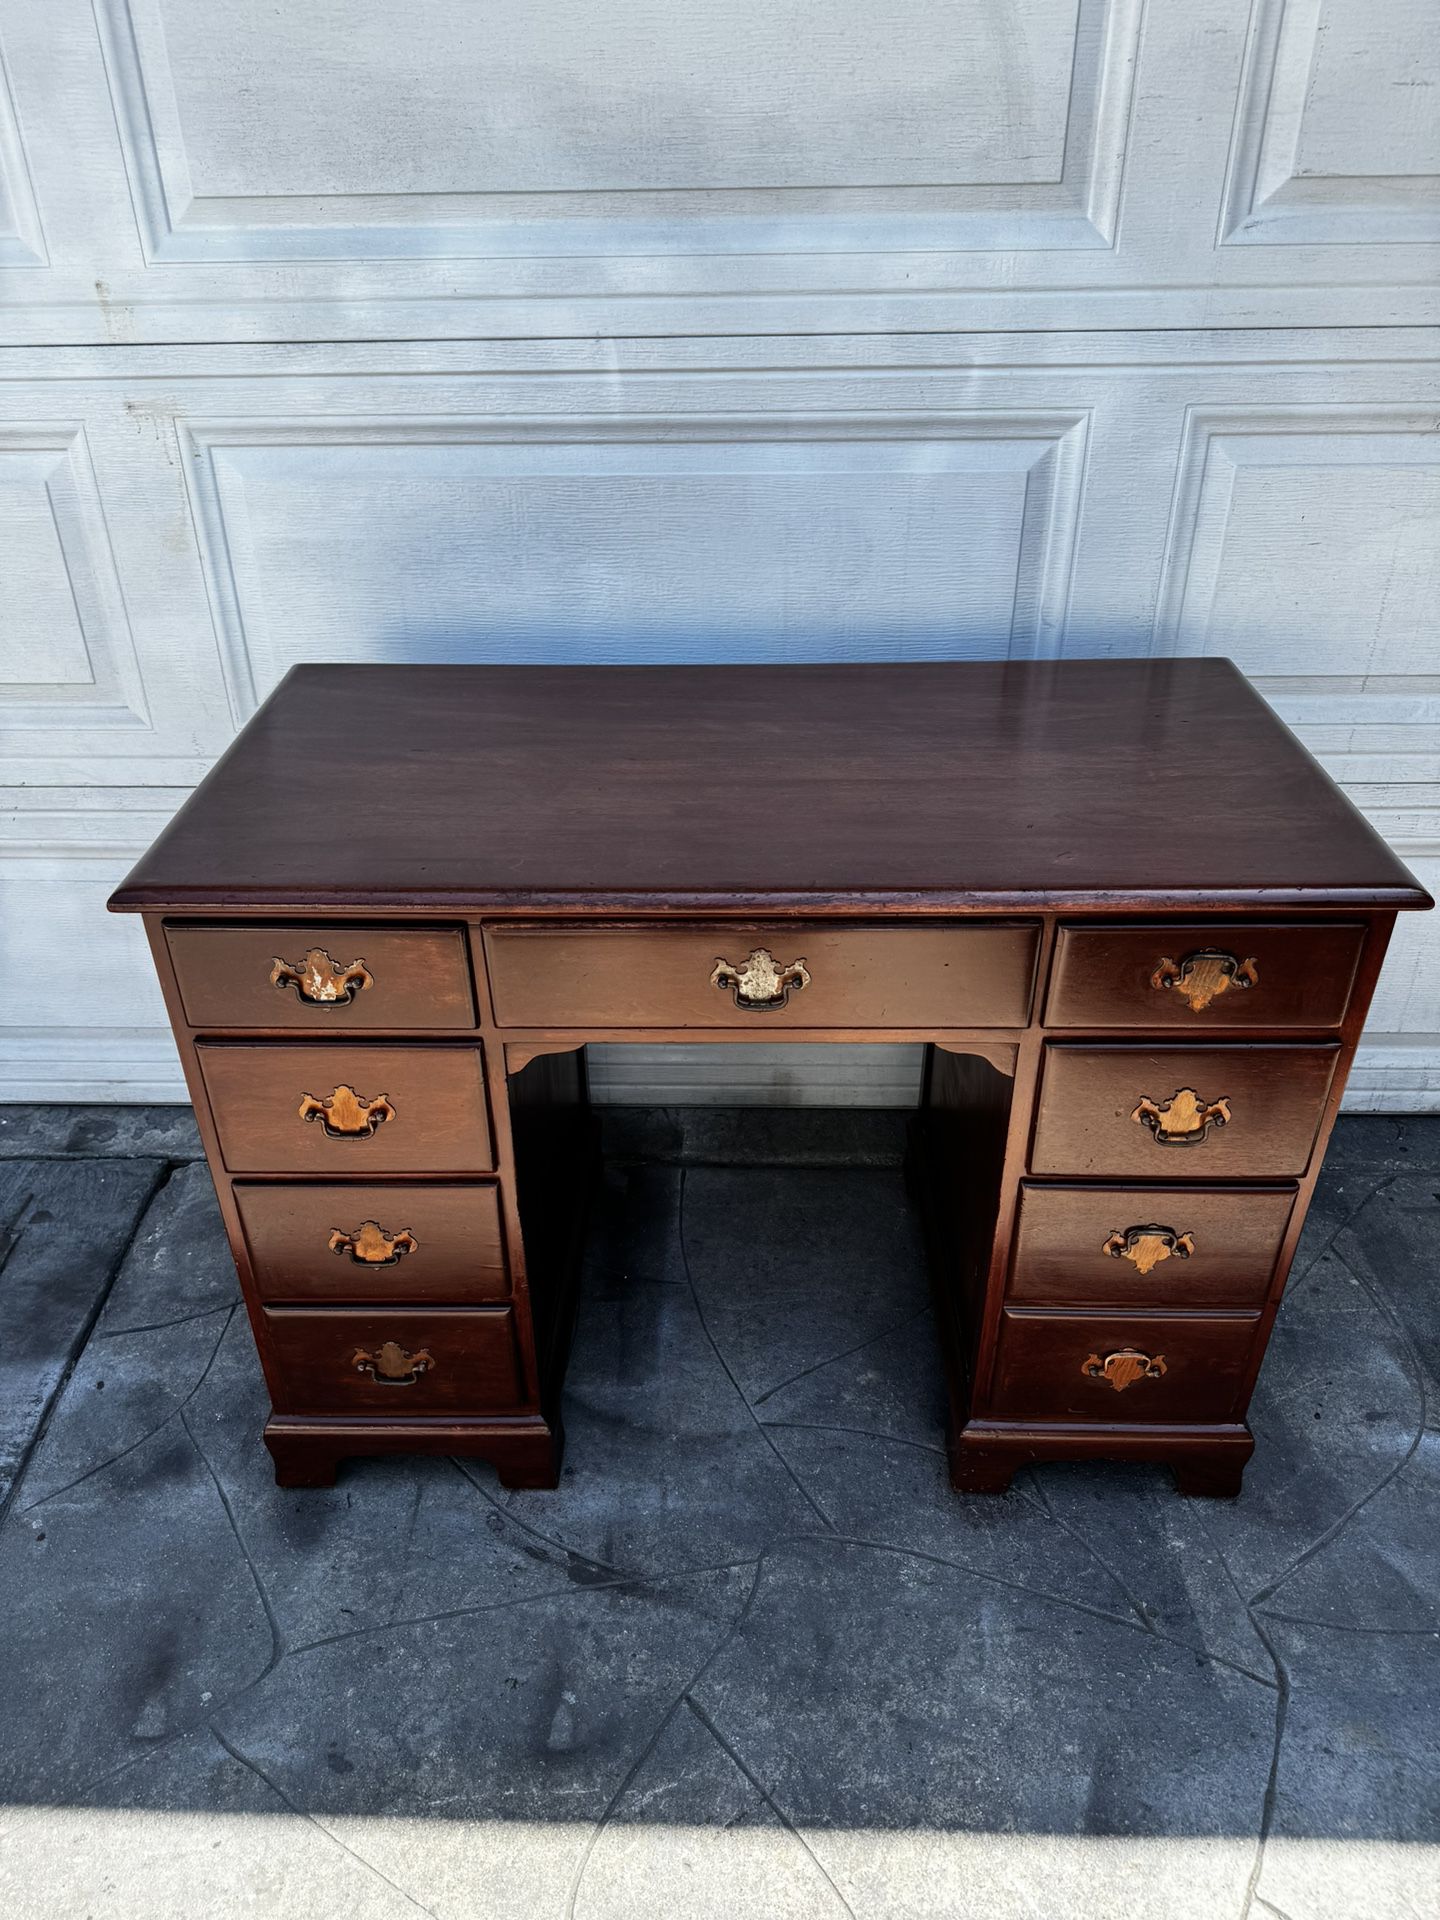 Antique / vintage double pedestal kneehole solid mahogany English writing desk 21 1/2 deep x 42L x 30